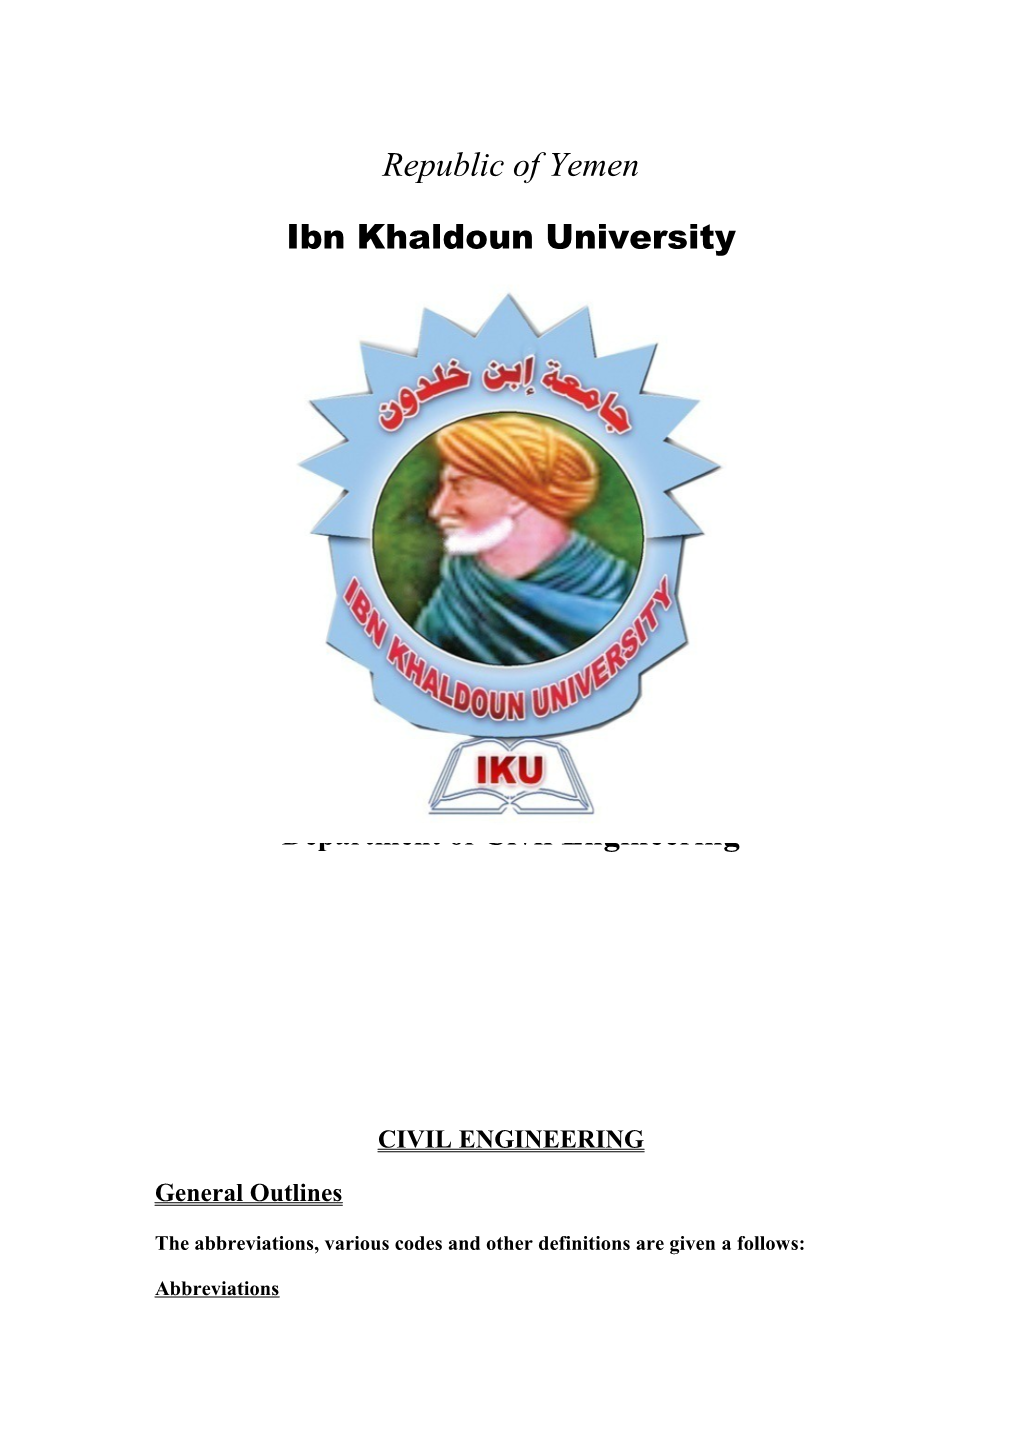 Ibn Khaldoun University Faculty of Engineering